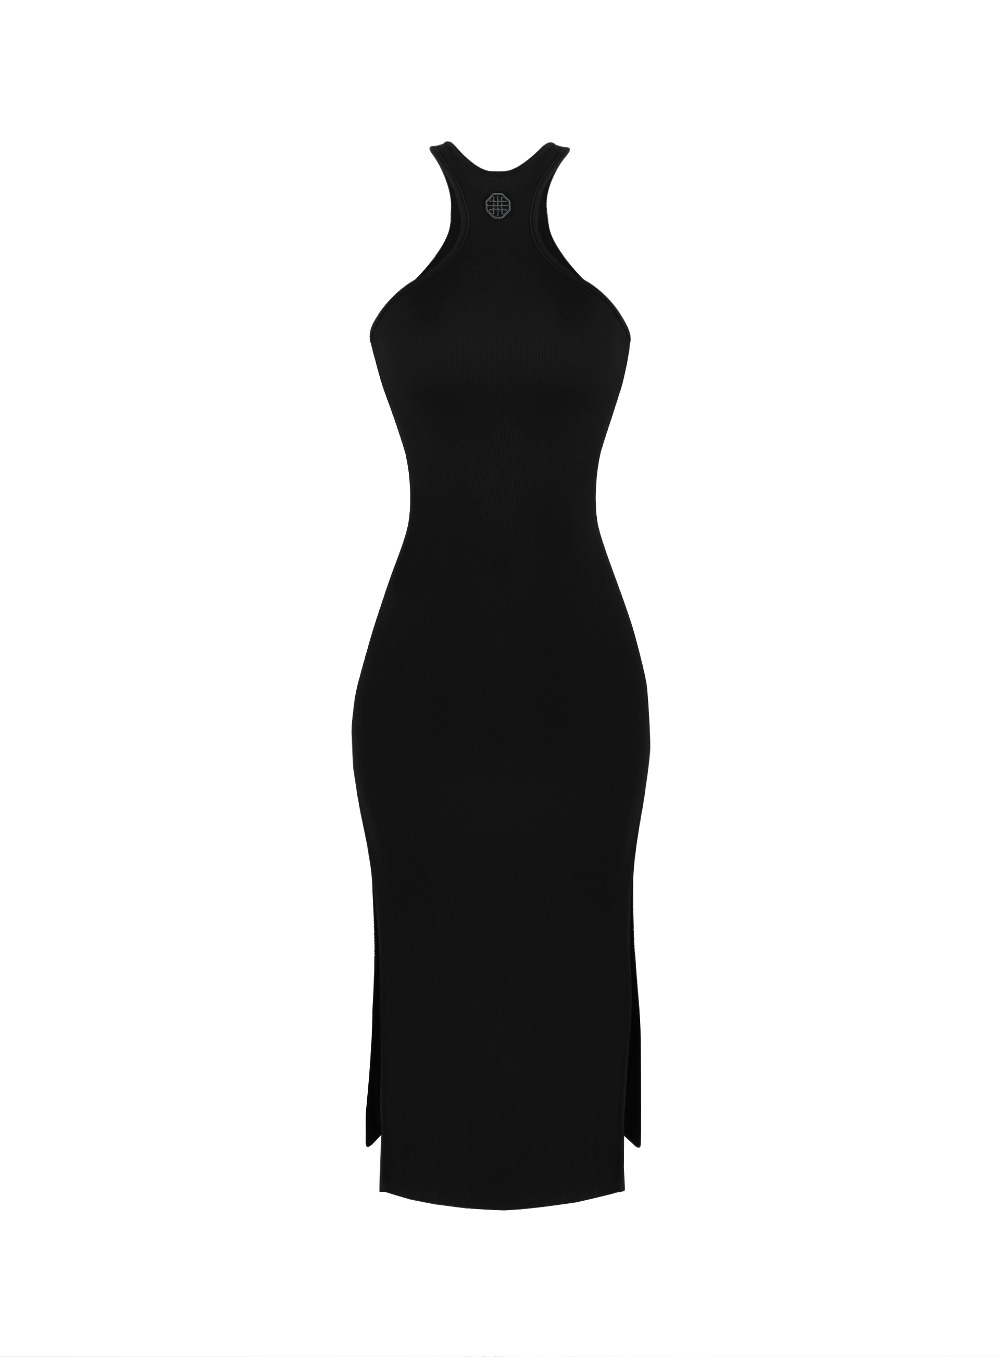 [ep1-drs22-005]Sleeveless Dress 1 - Black